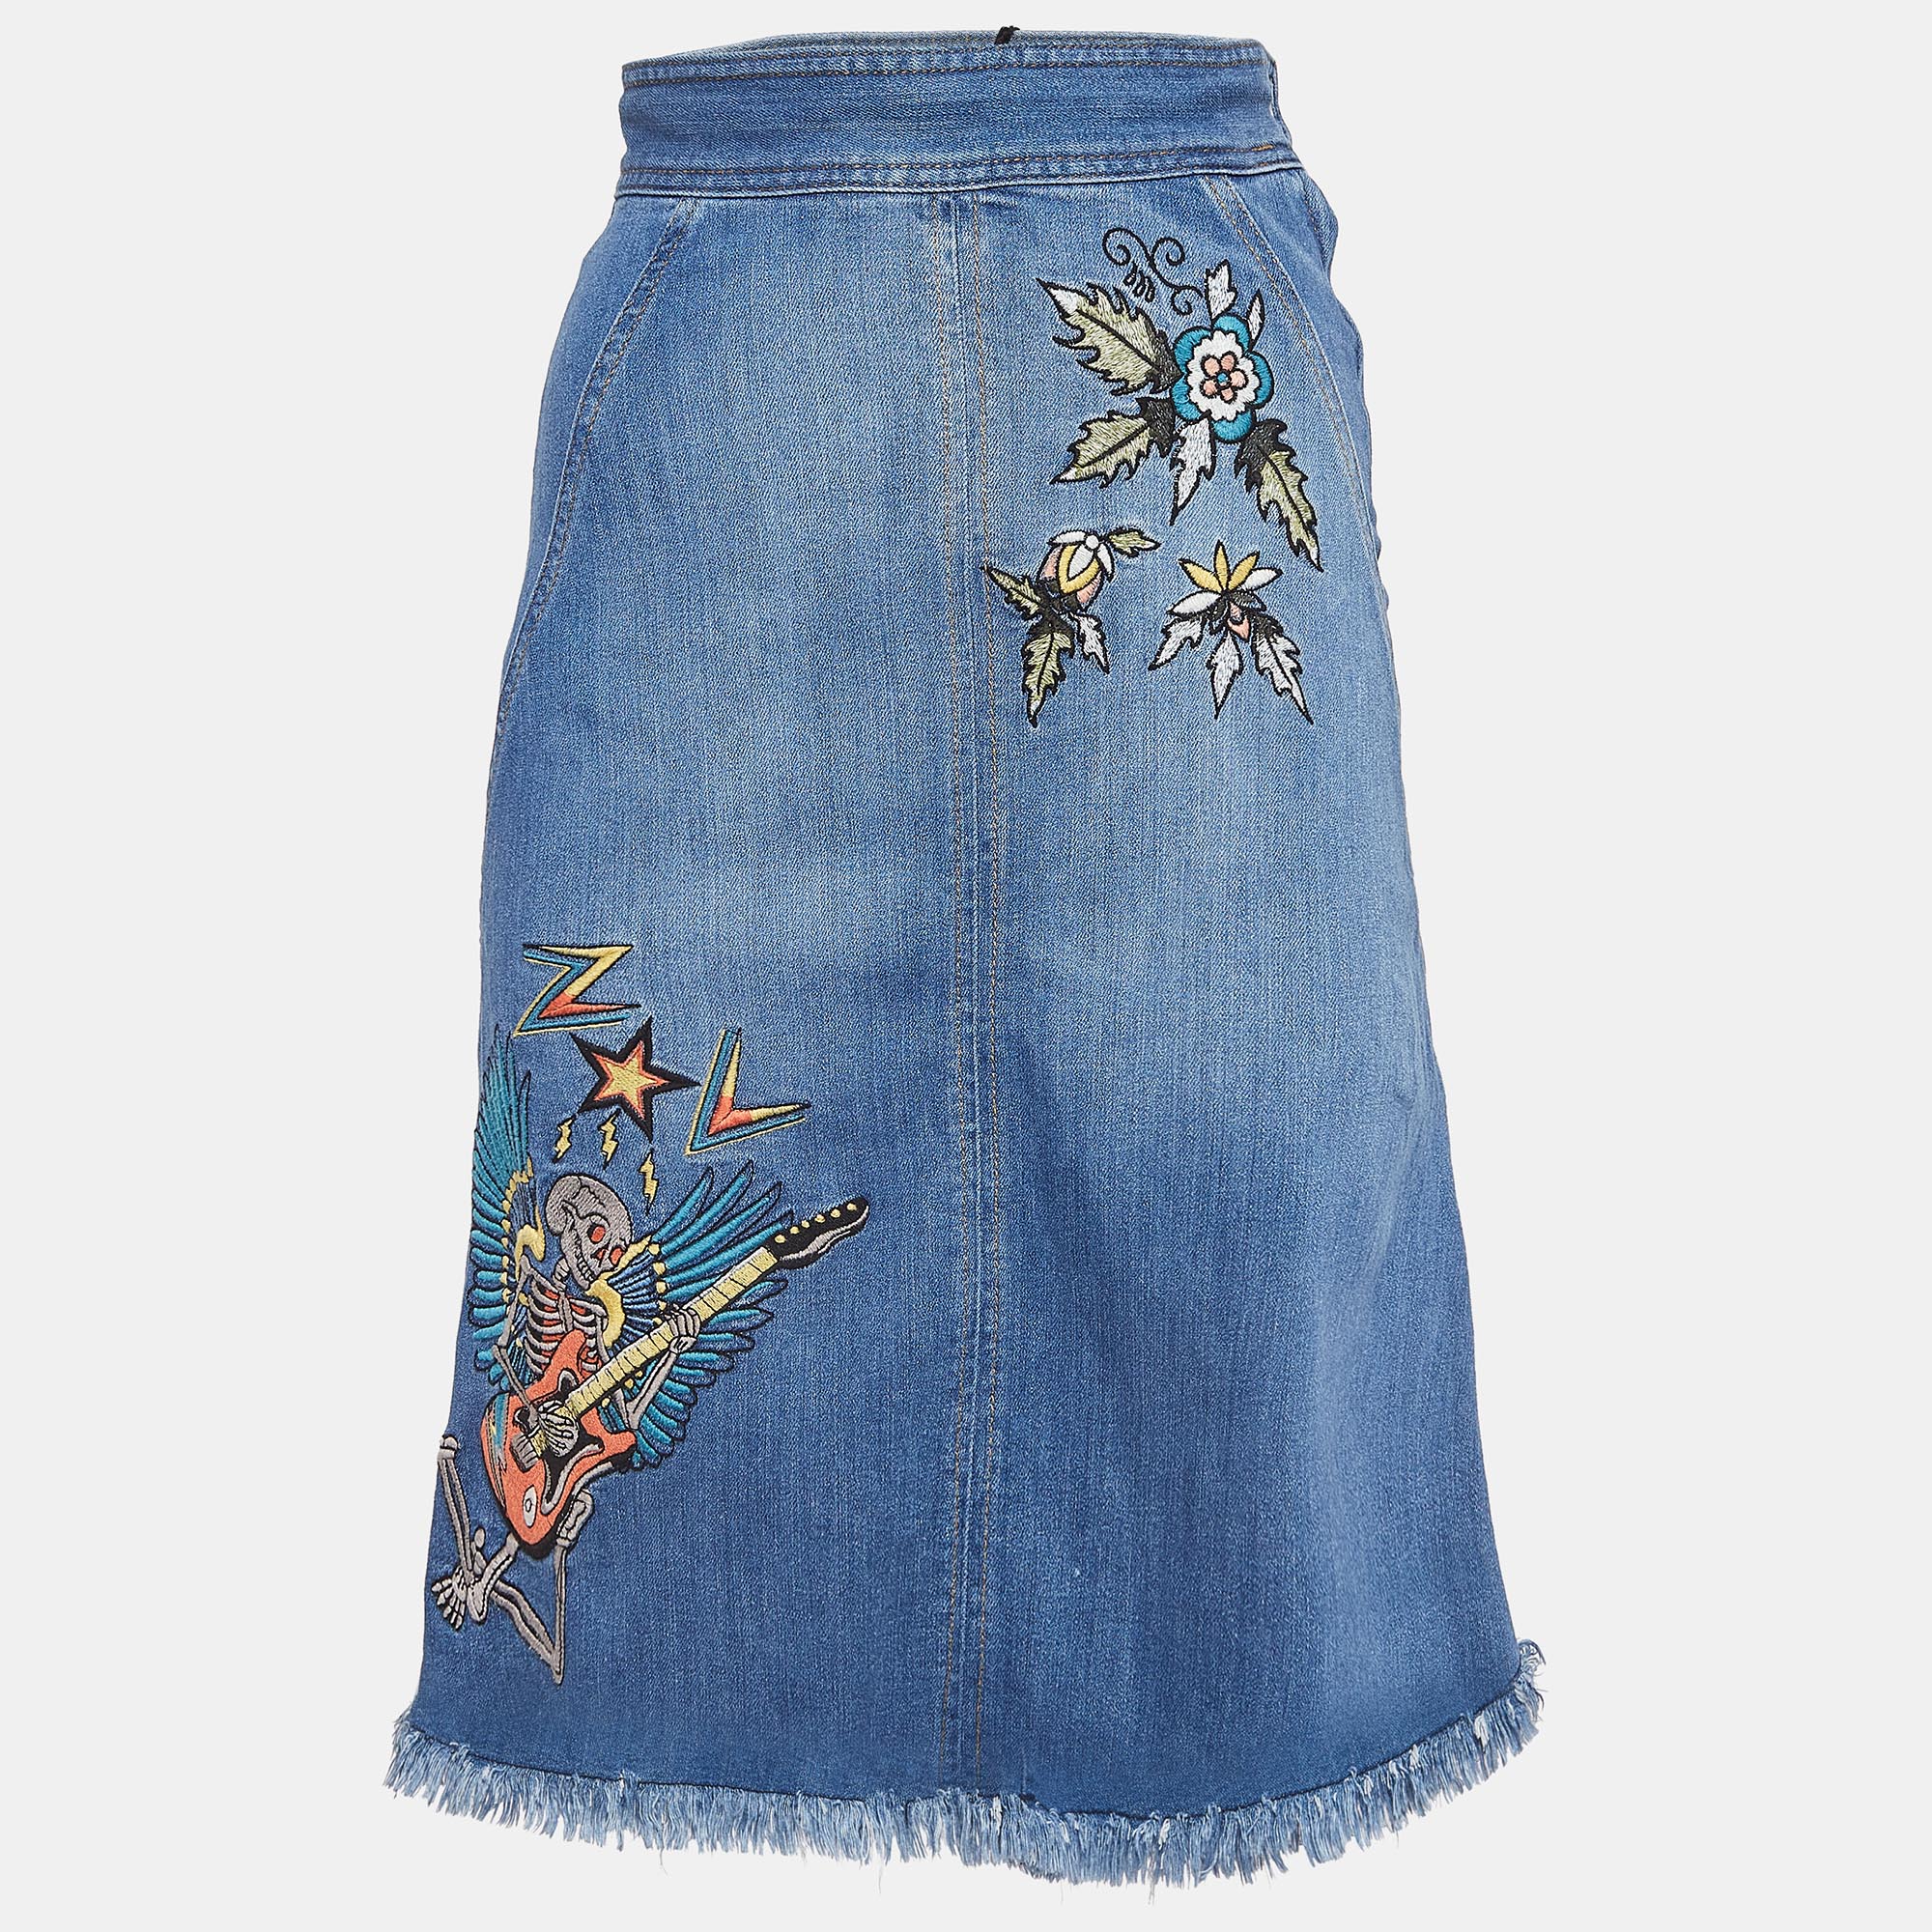 Kenzo zadig & voltaire blue embroidered denim knee length skirt s